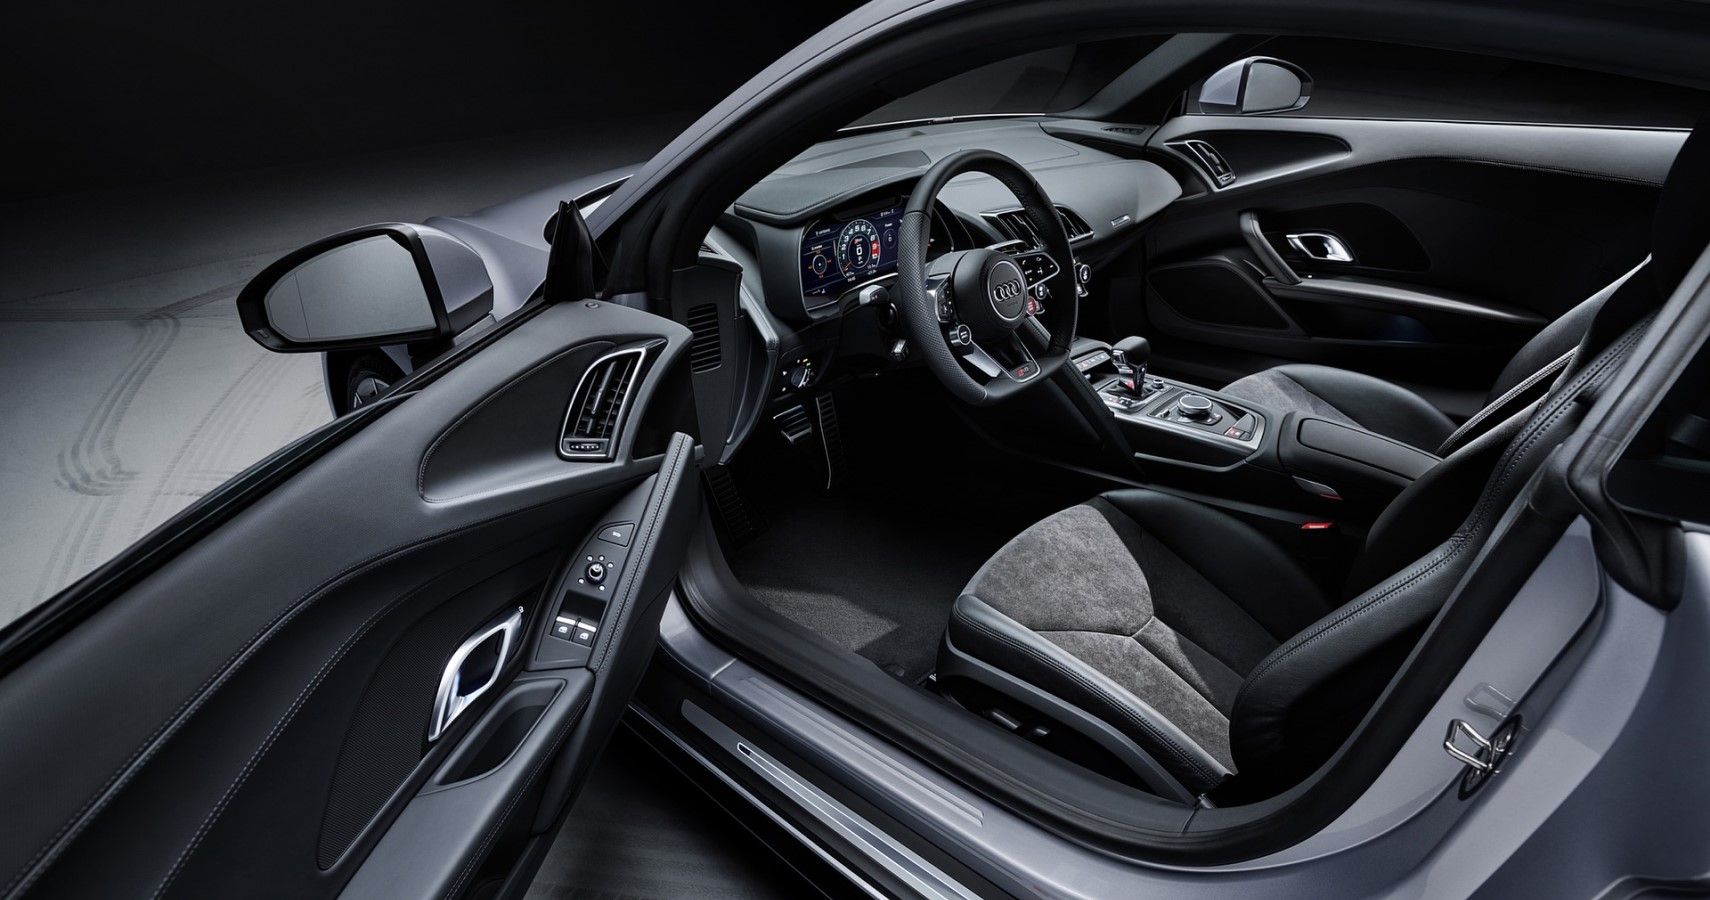 2021 Audi R8 sporty interior layout